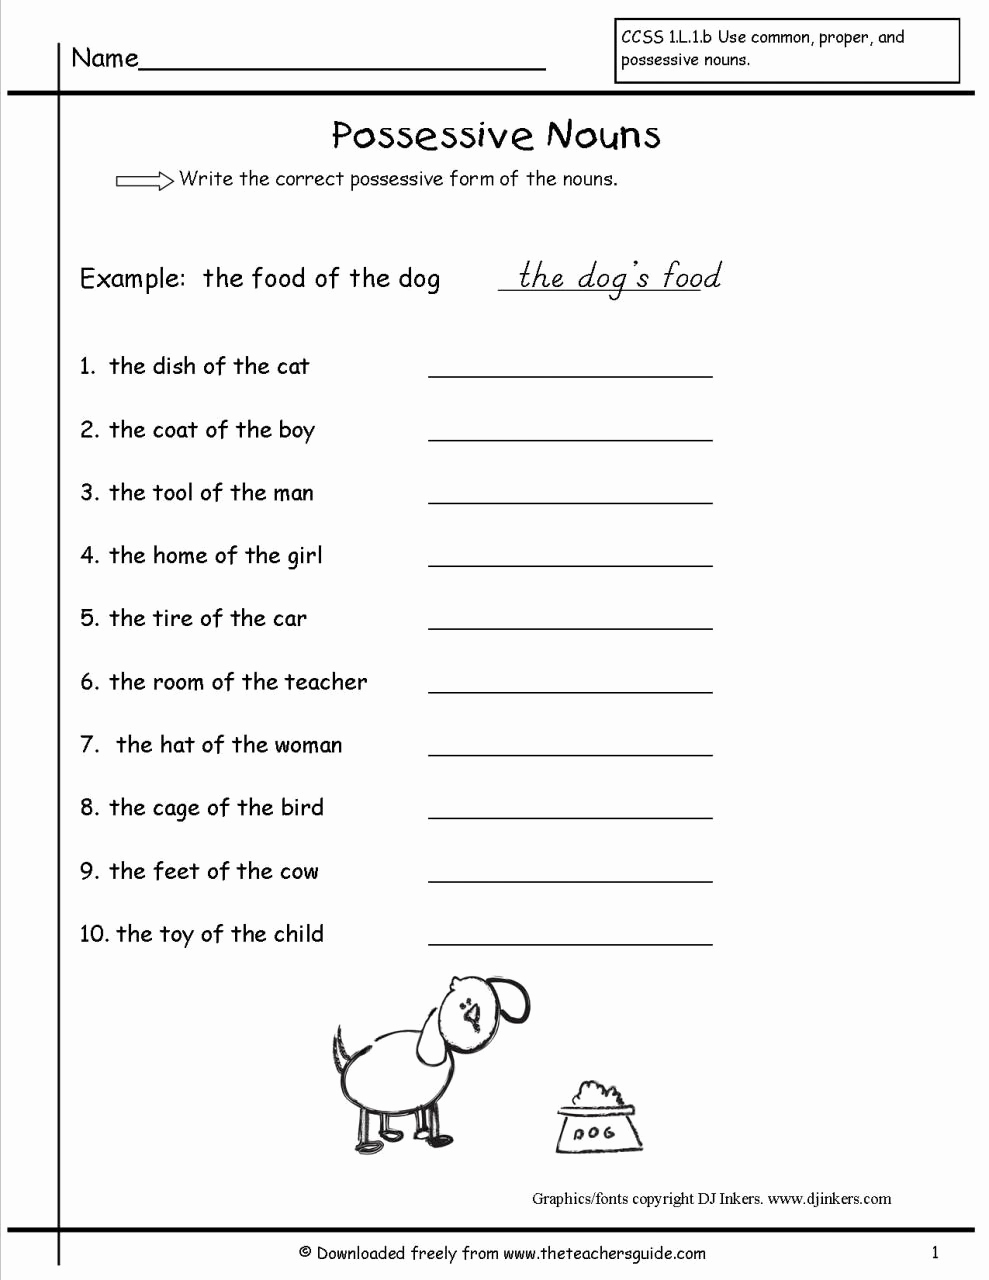 Possessive Pronouns Worksheet 5th Grade Elegant 5th Grade Possessive Nouns Worksheets with Answers